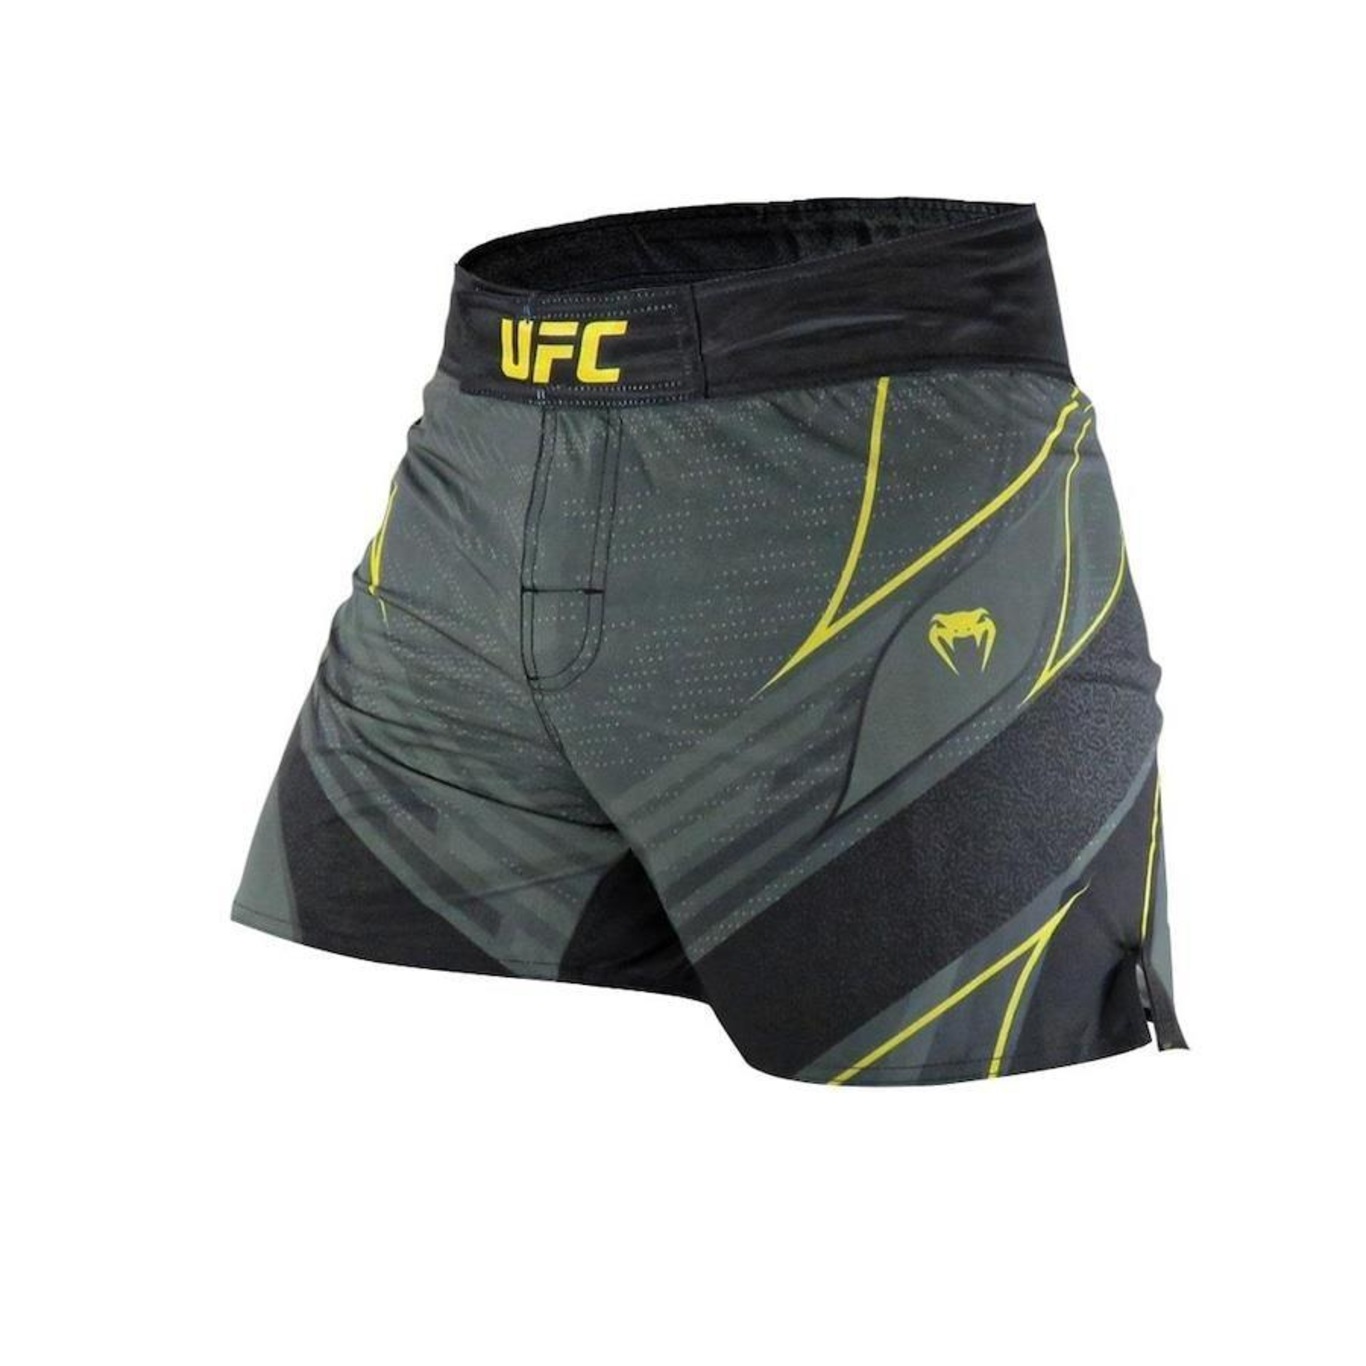 Venum Men's UFC Authentic Fight Night Vale Tudo Short Fit Black :  : Sports & Outdoors